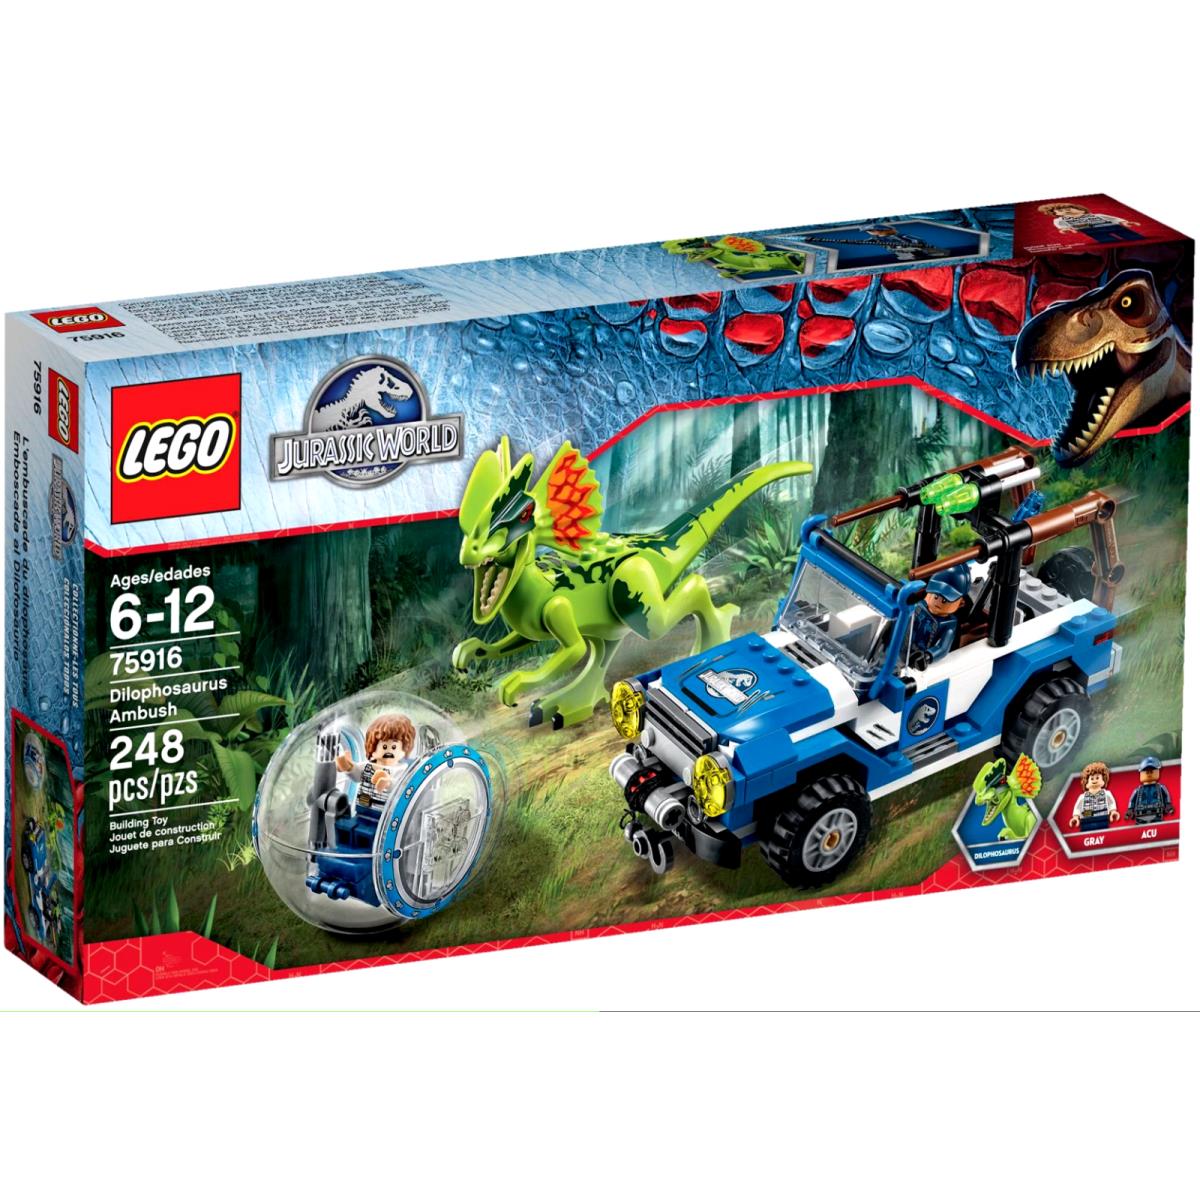 Lego Jurassic World 75917 Raptor Rampage - Retired Set